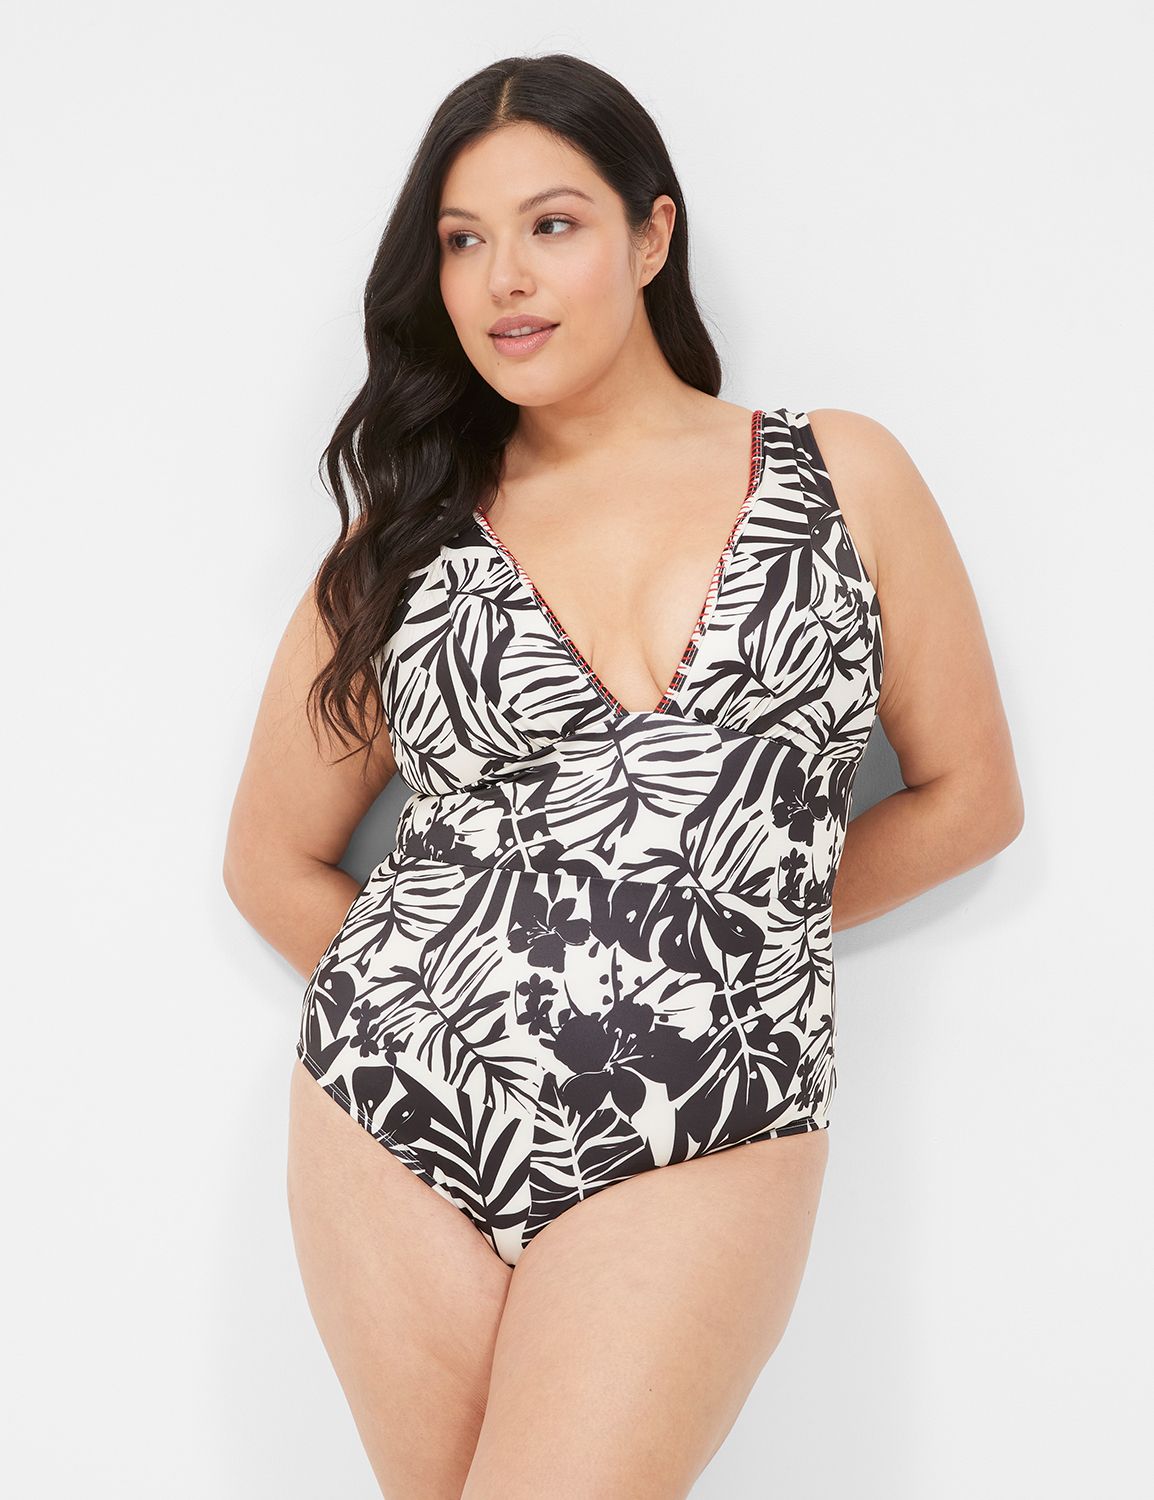 matoen Women's Plus Size Swimsuit, Women's Plus Size One Piece Ruched Tummy  Control Bathing Suit Swimwear Bikini 